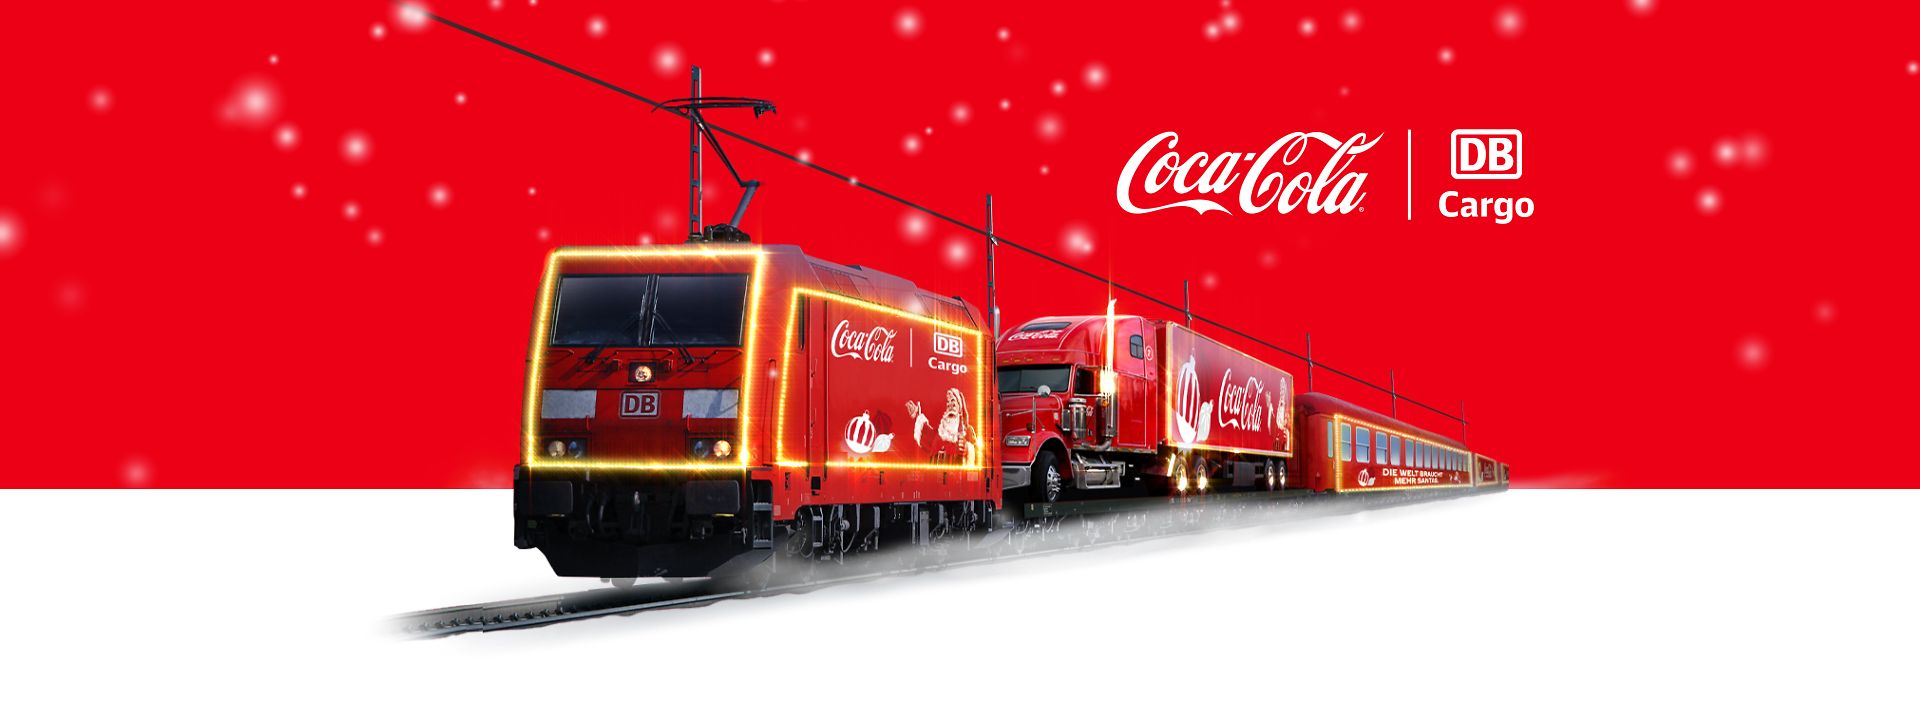 DB Cargo and Coca-Cola Christmas train